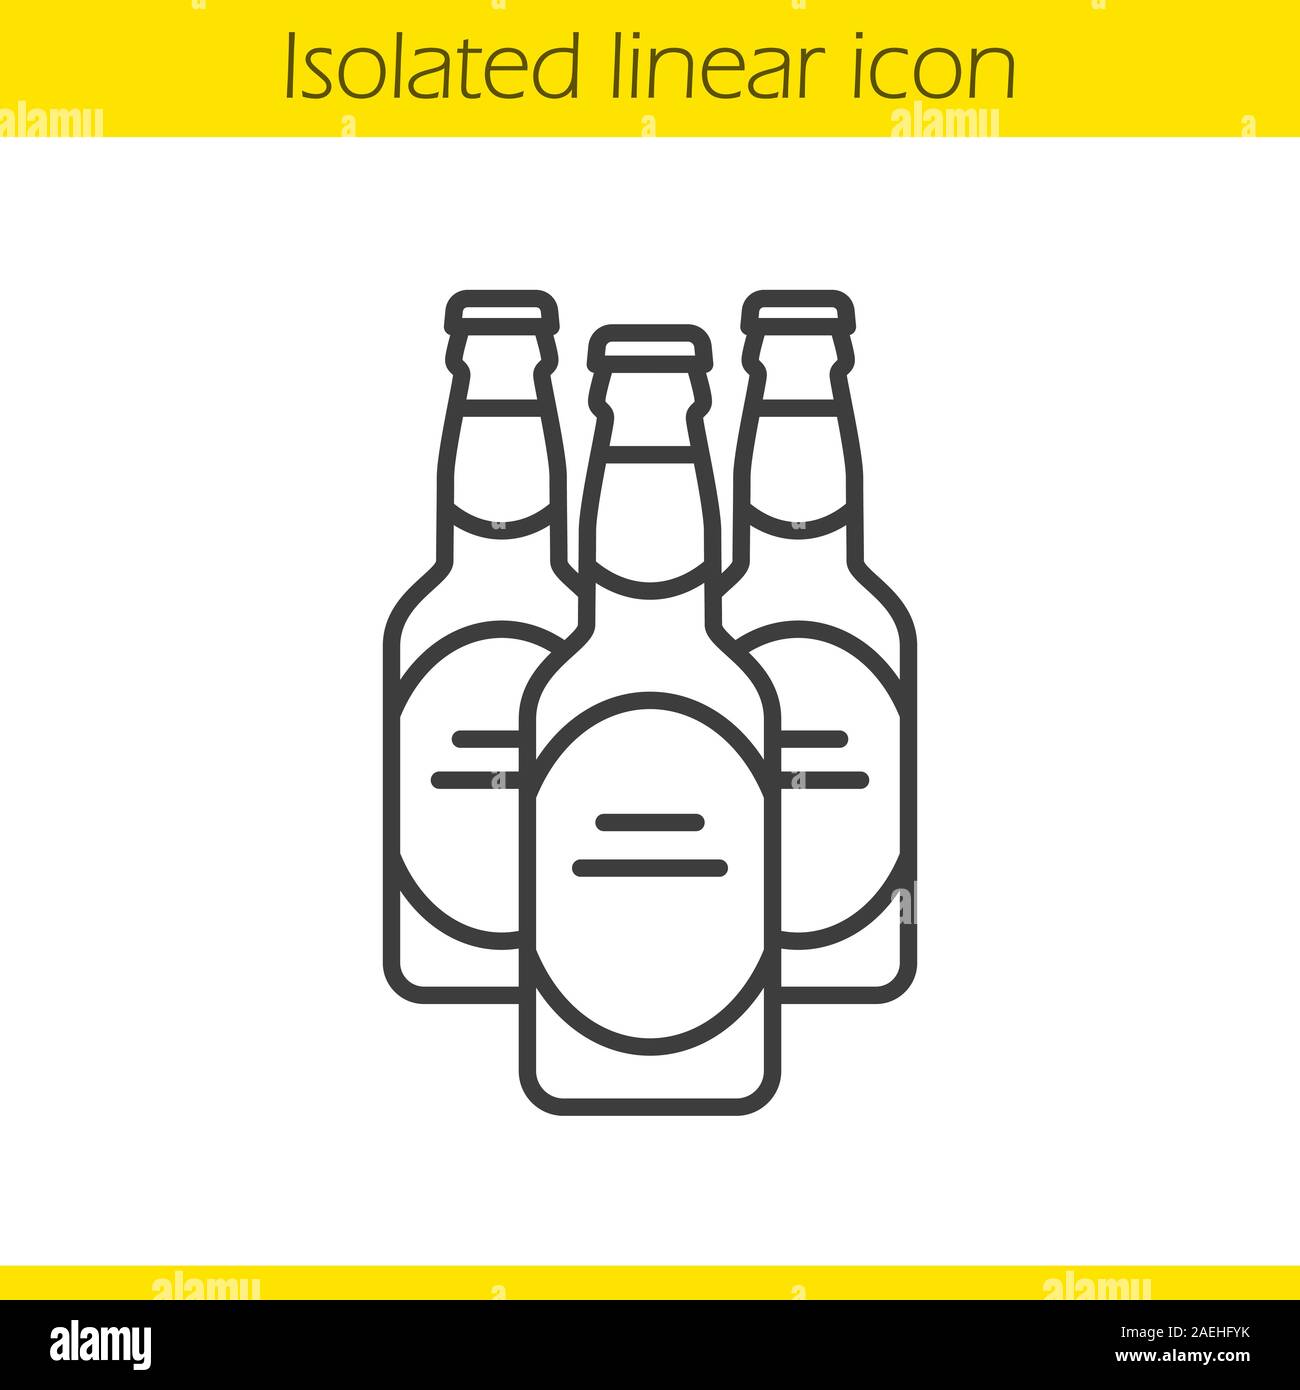 Vector Sketch Bottle Beer Bottle Isolated Stock Vector (Royalty Free)  669402790 | Shutterstock